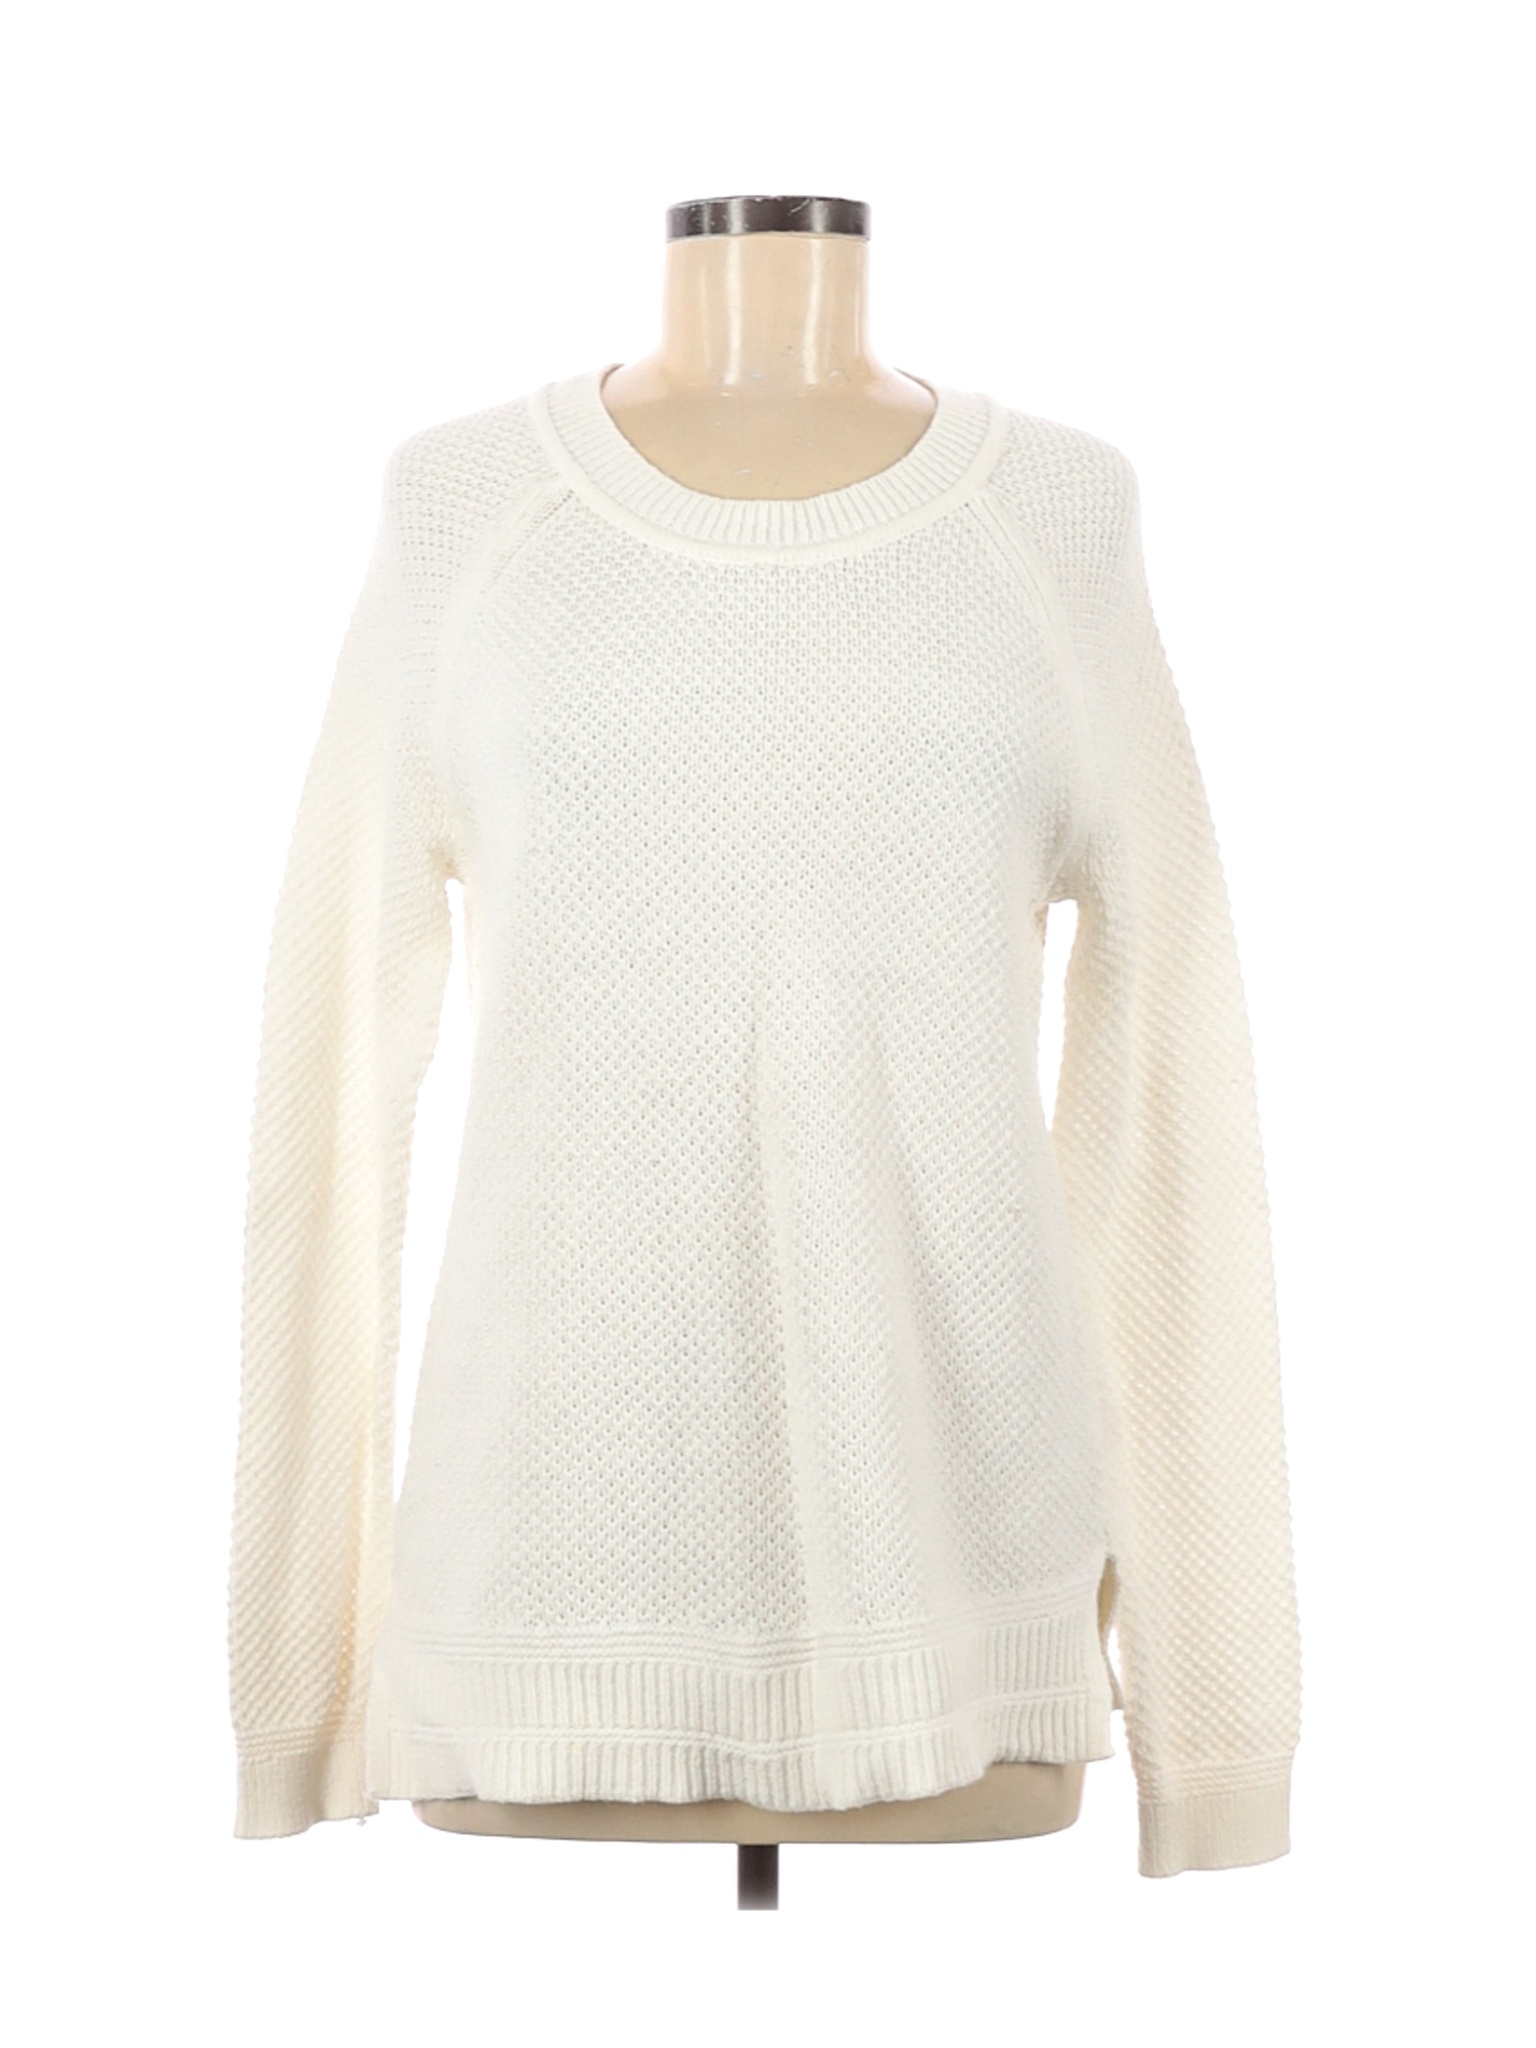 Old Navy Women White Pullover Sweater M | eBay